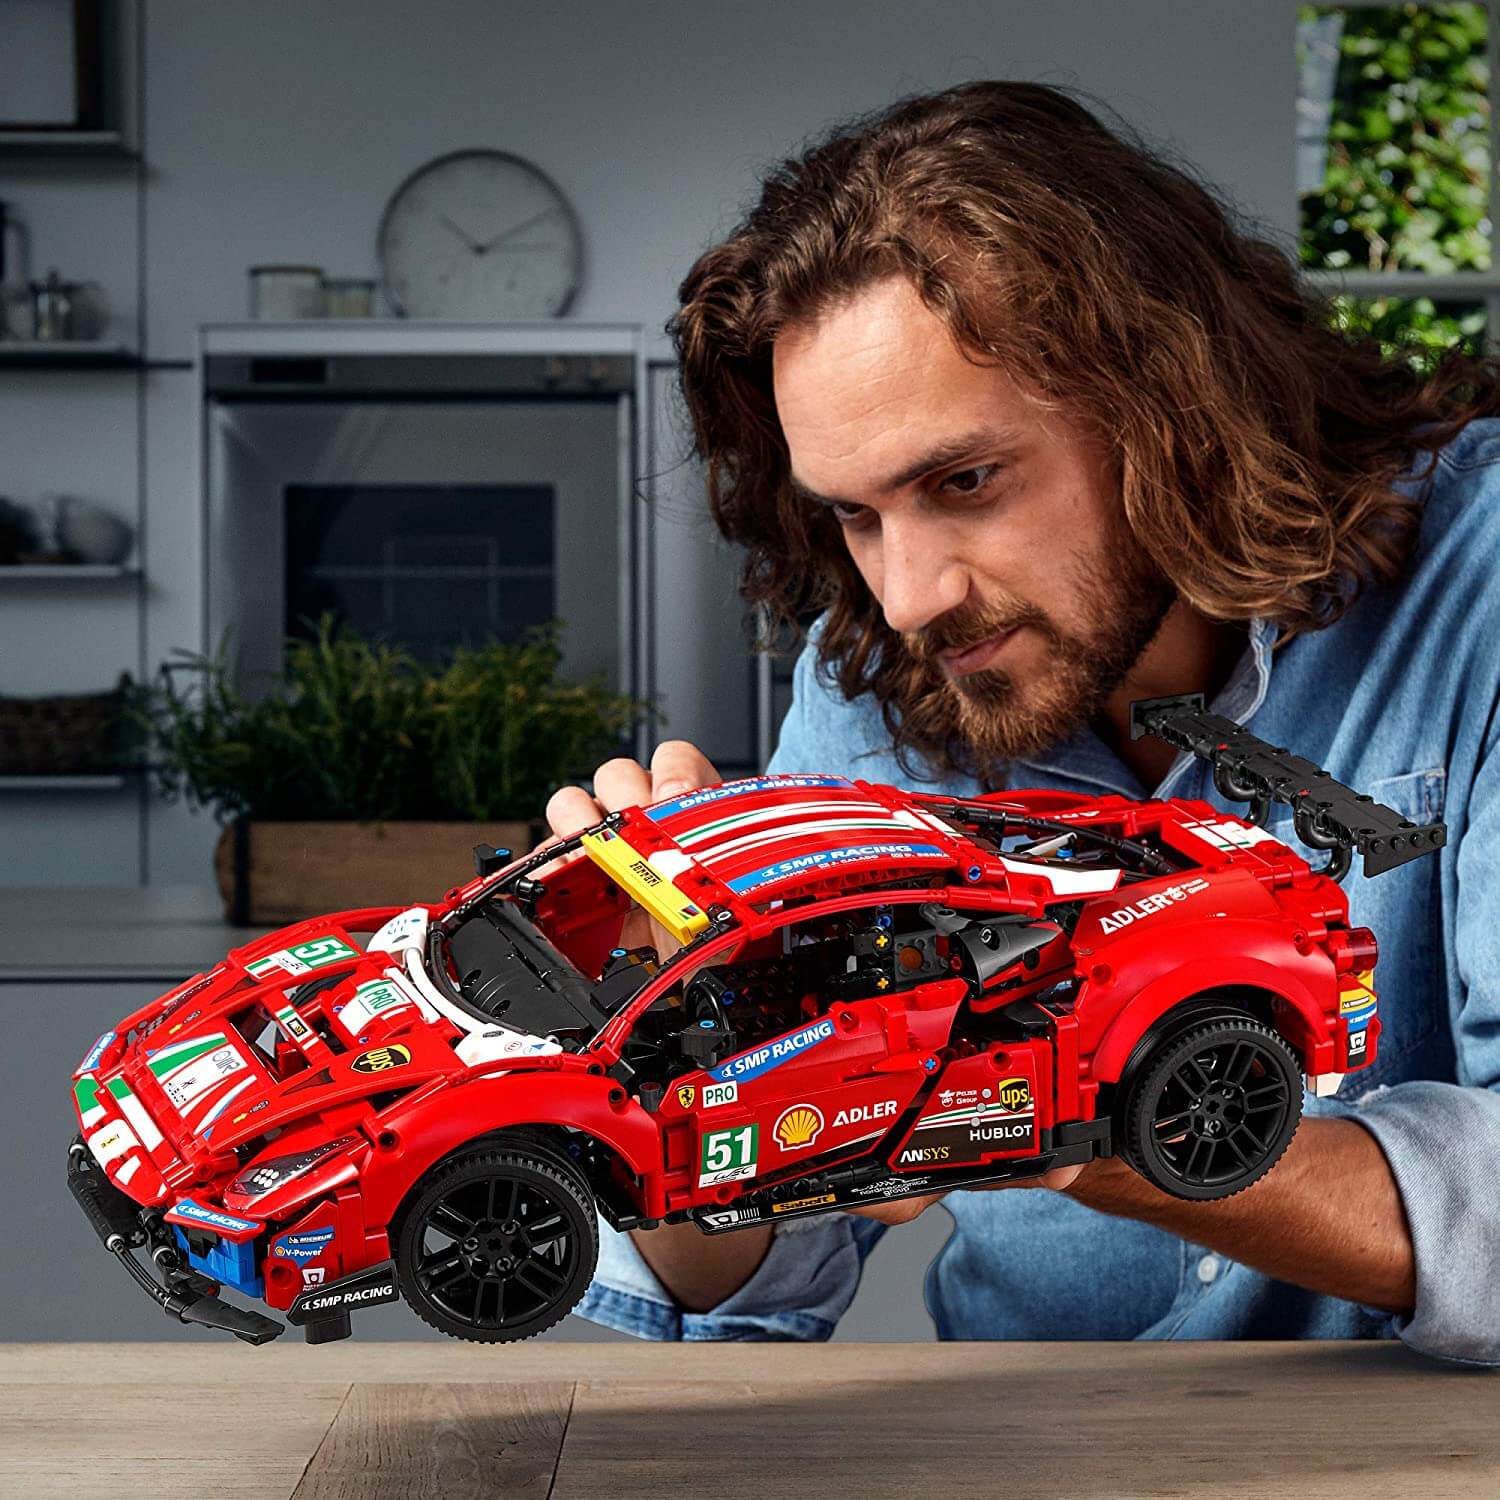 LEGO Technic Ferrari 488 GTE “AF Corse #51” 1677 Piece Building Set (42125)